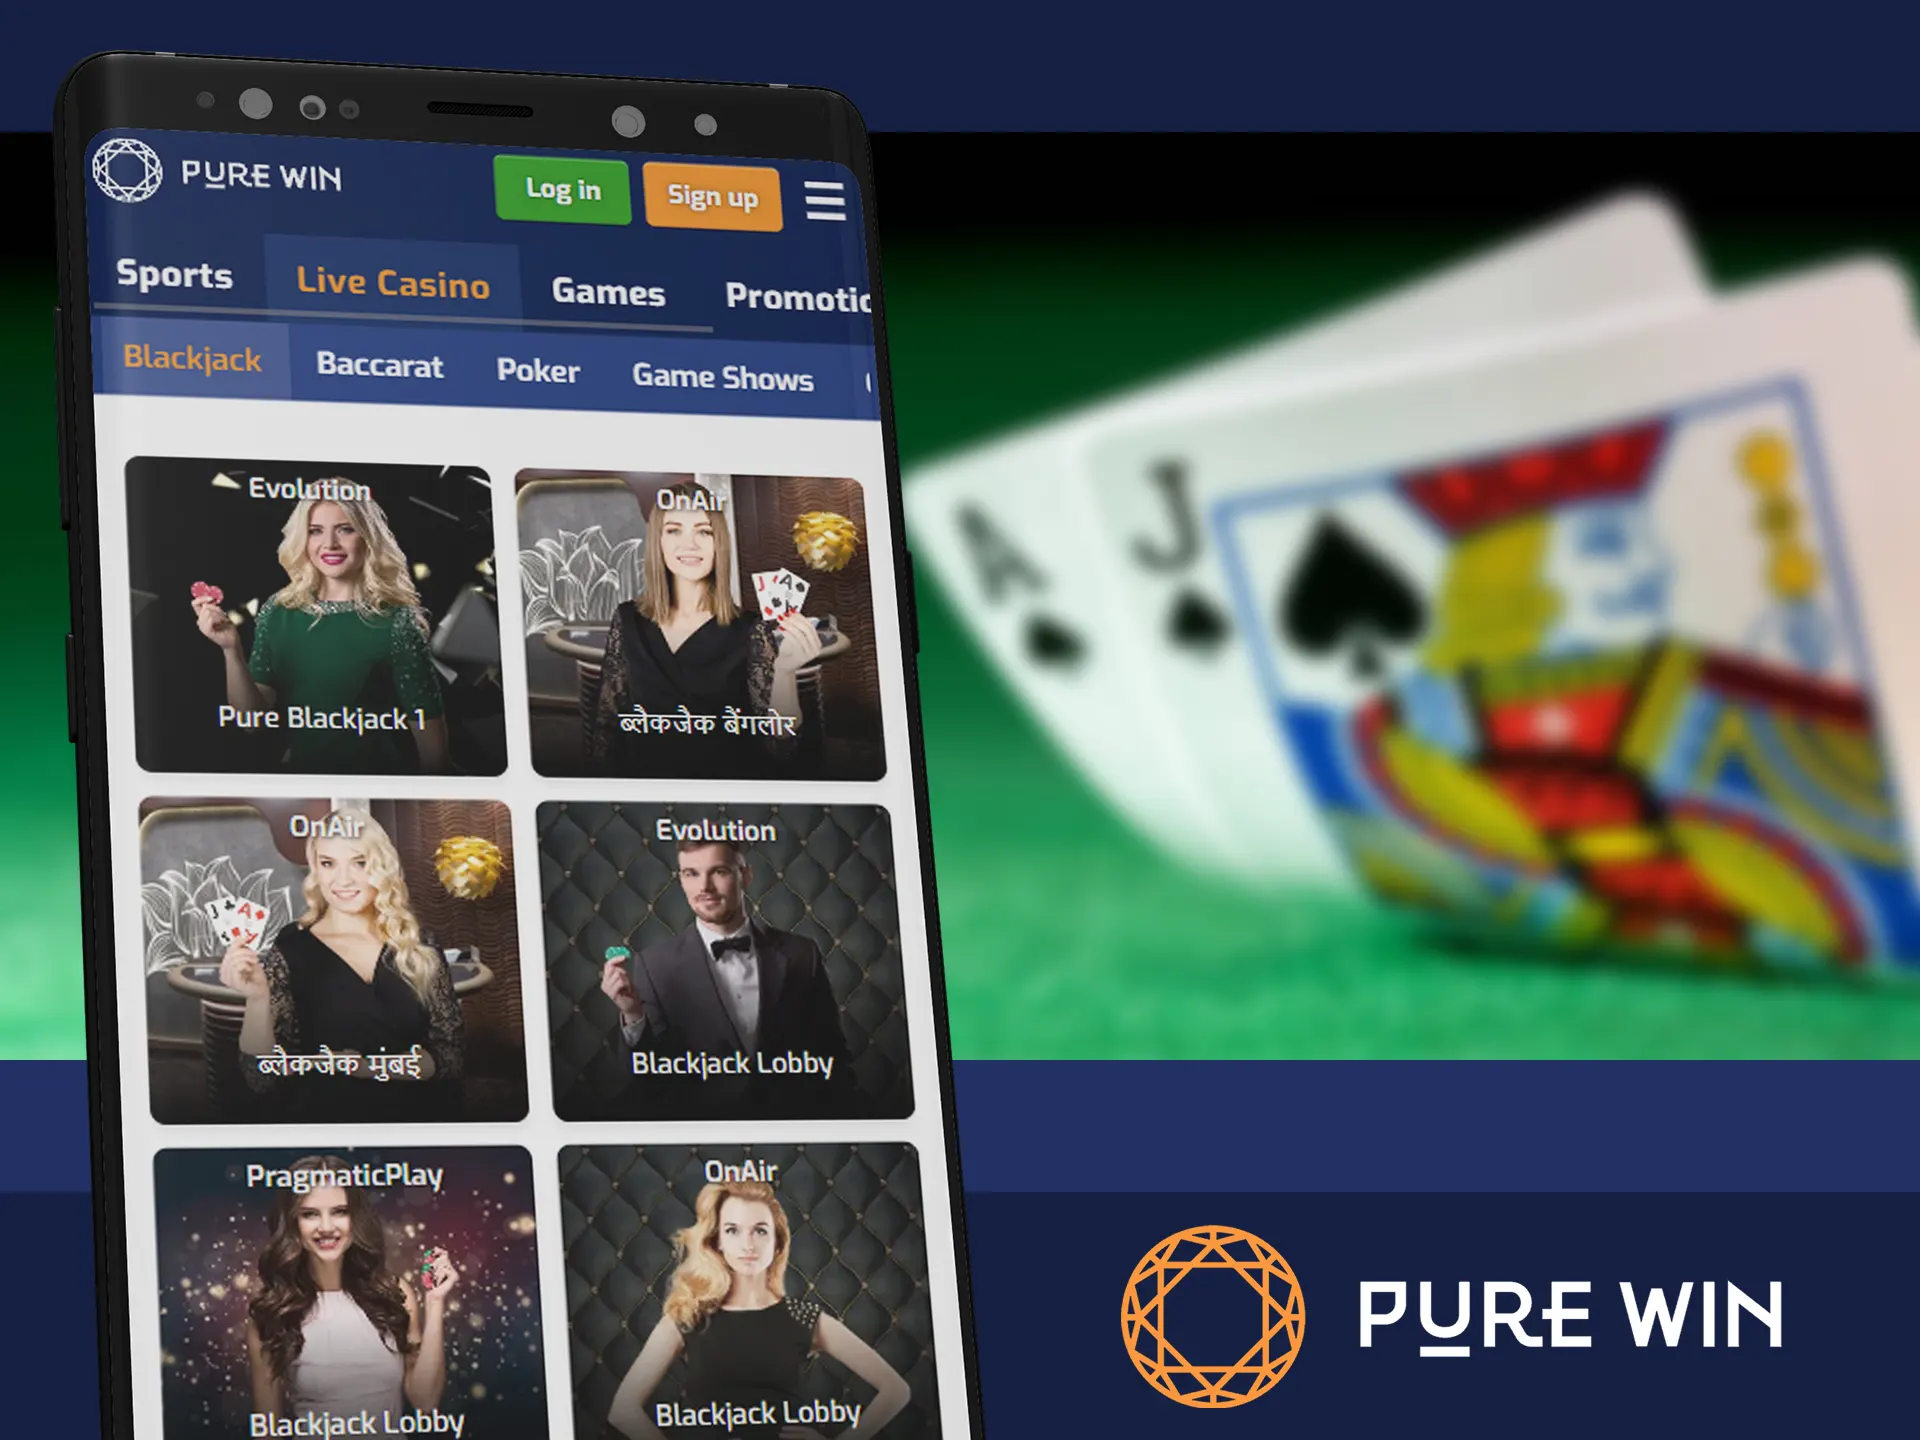 Play blackjack games using Pure Win app.